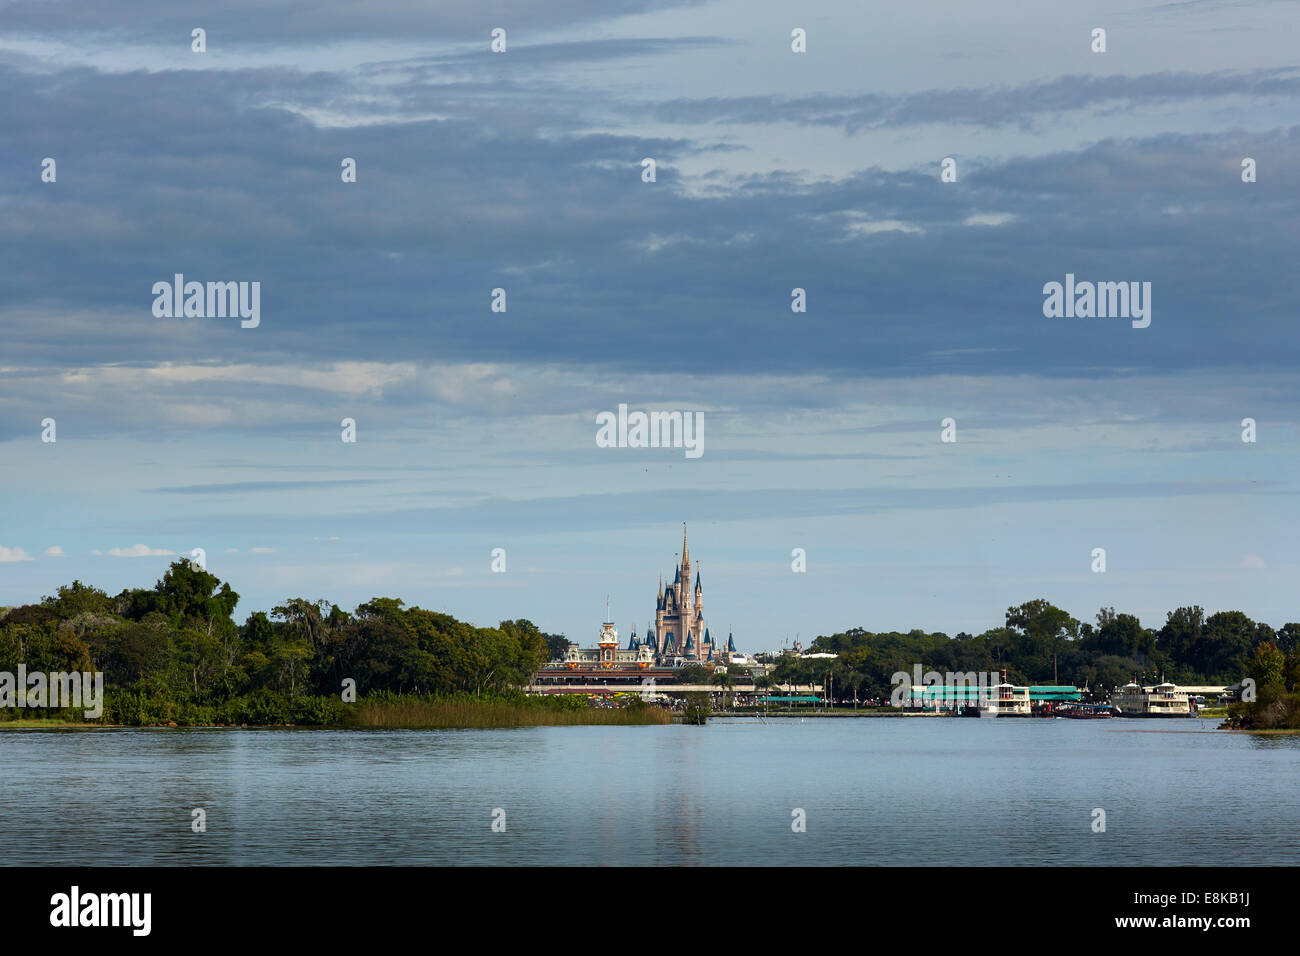 Florida USA Disney land lake, view of disney castle from across the lake Stock Photo